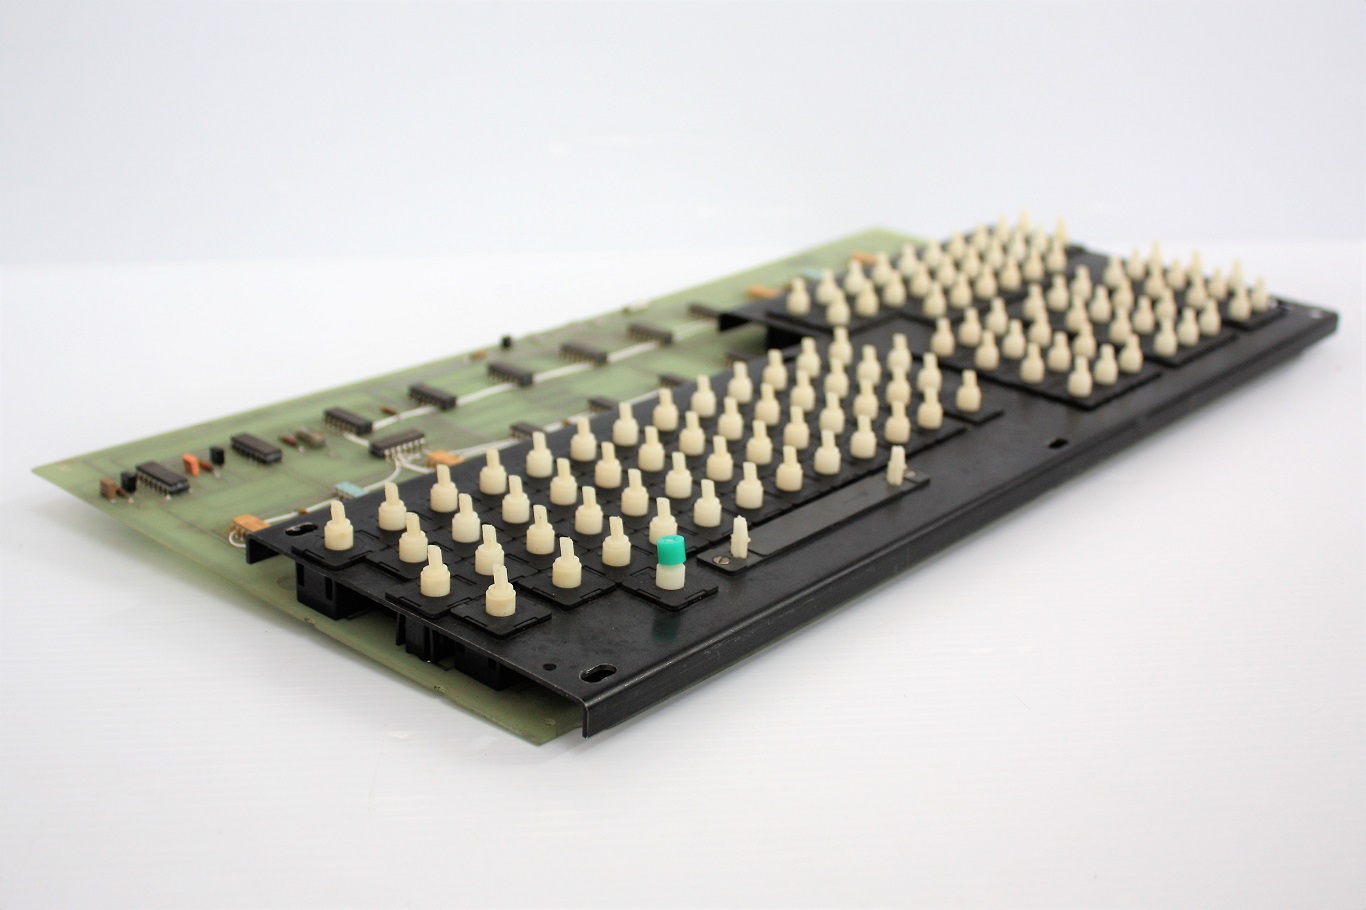 Bendix NASA Console - keyboard mechanism